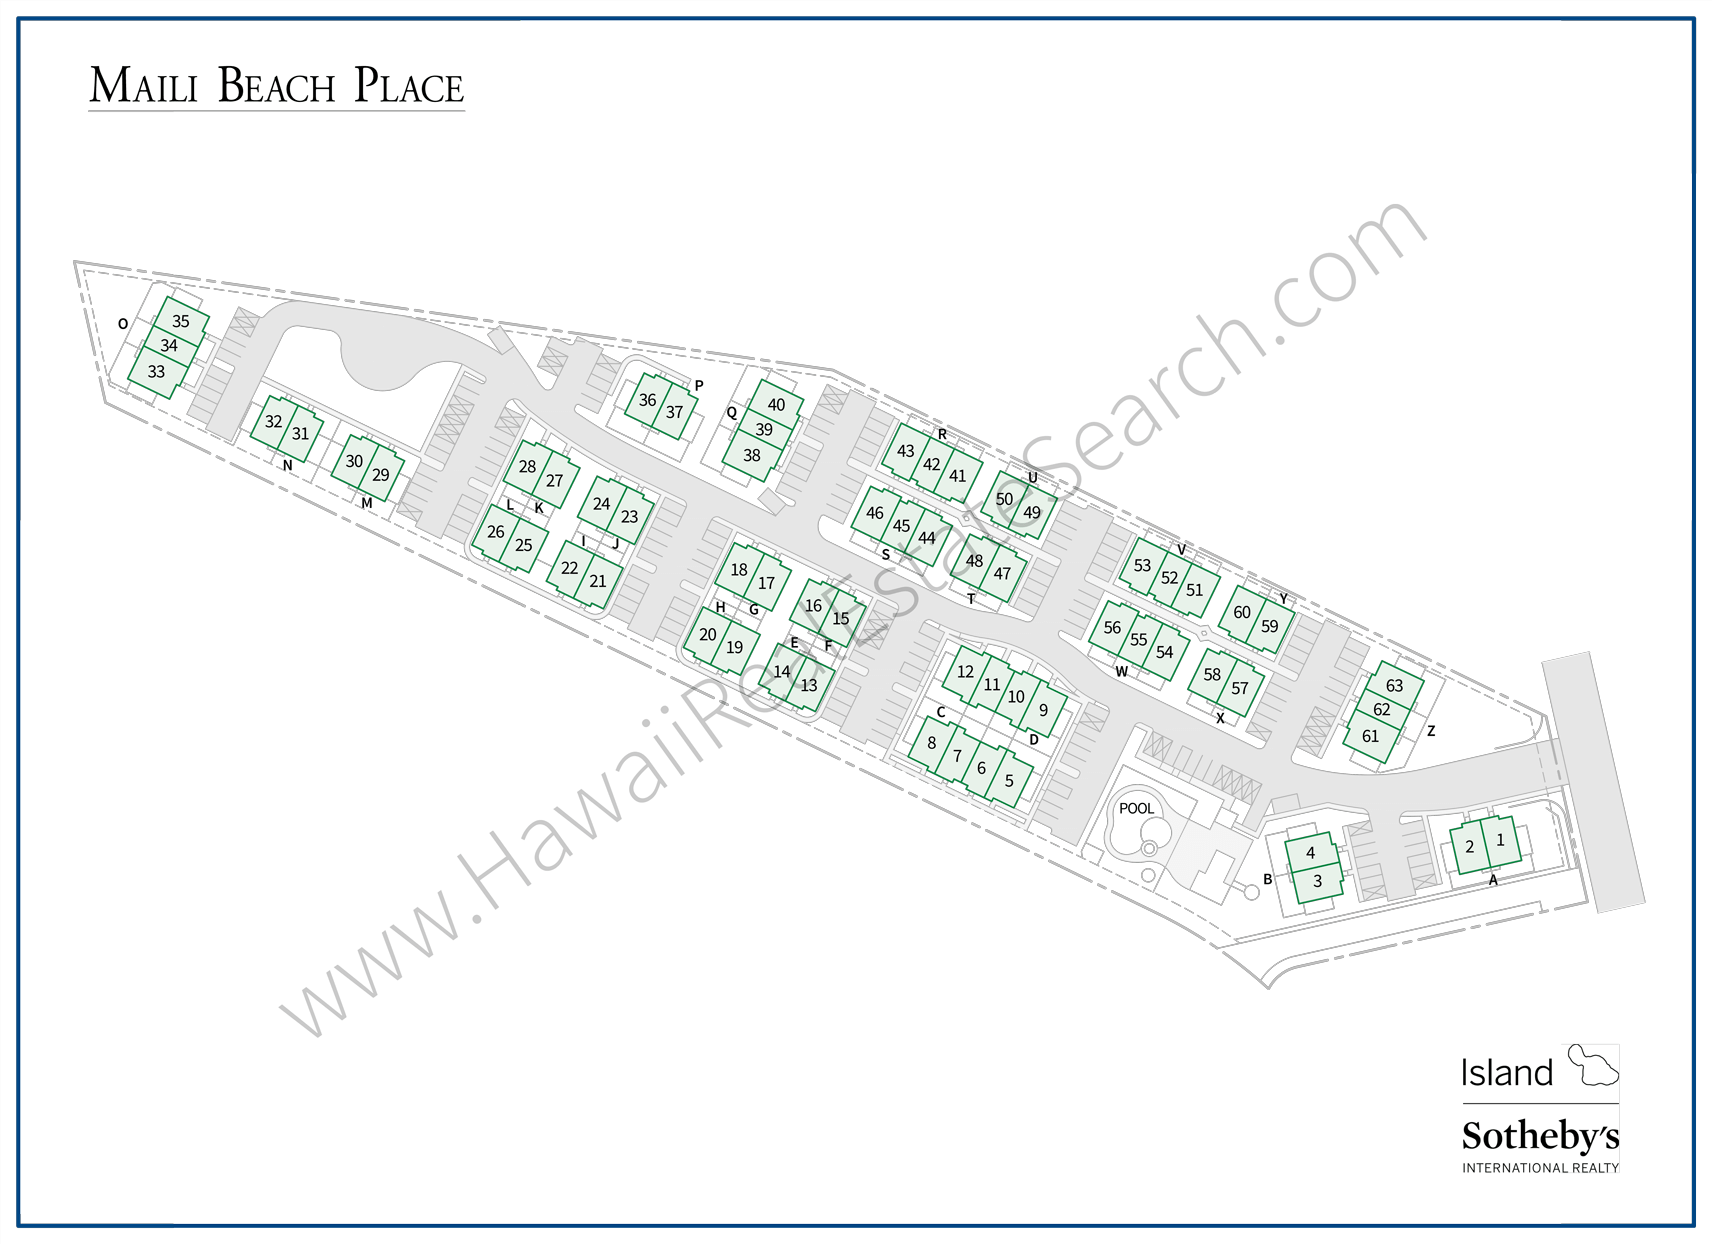 Maili Beach Place Map